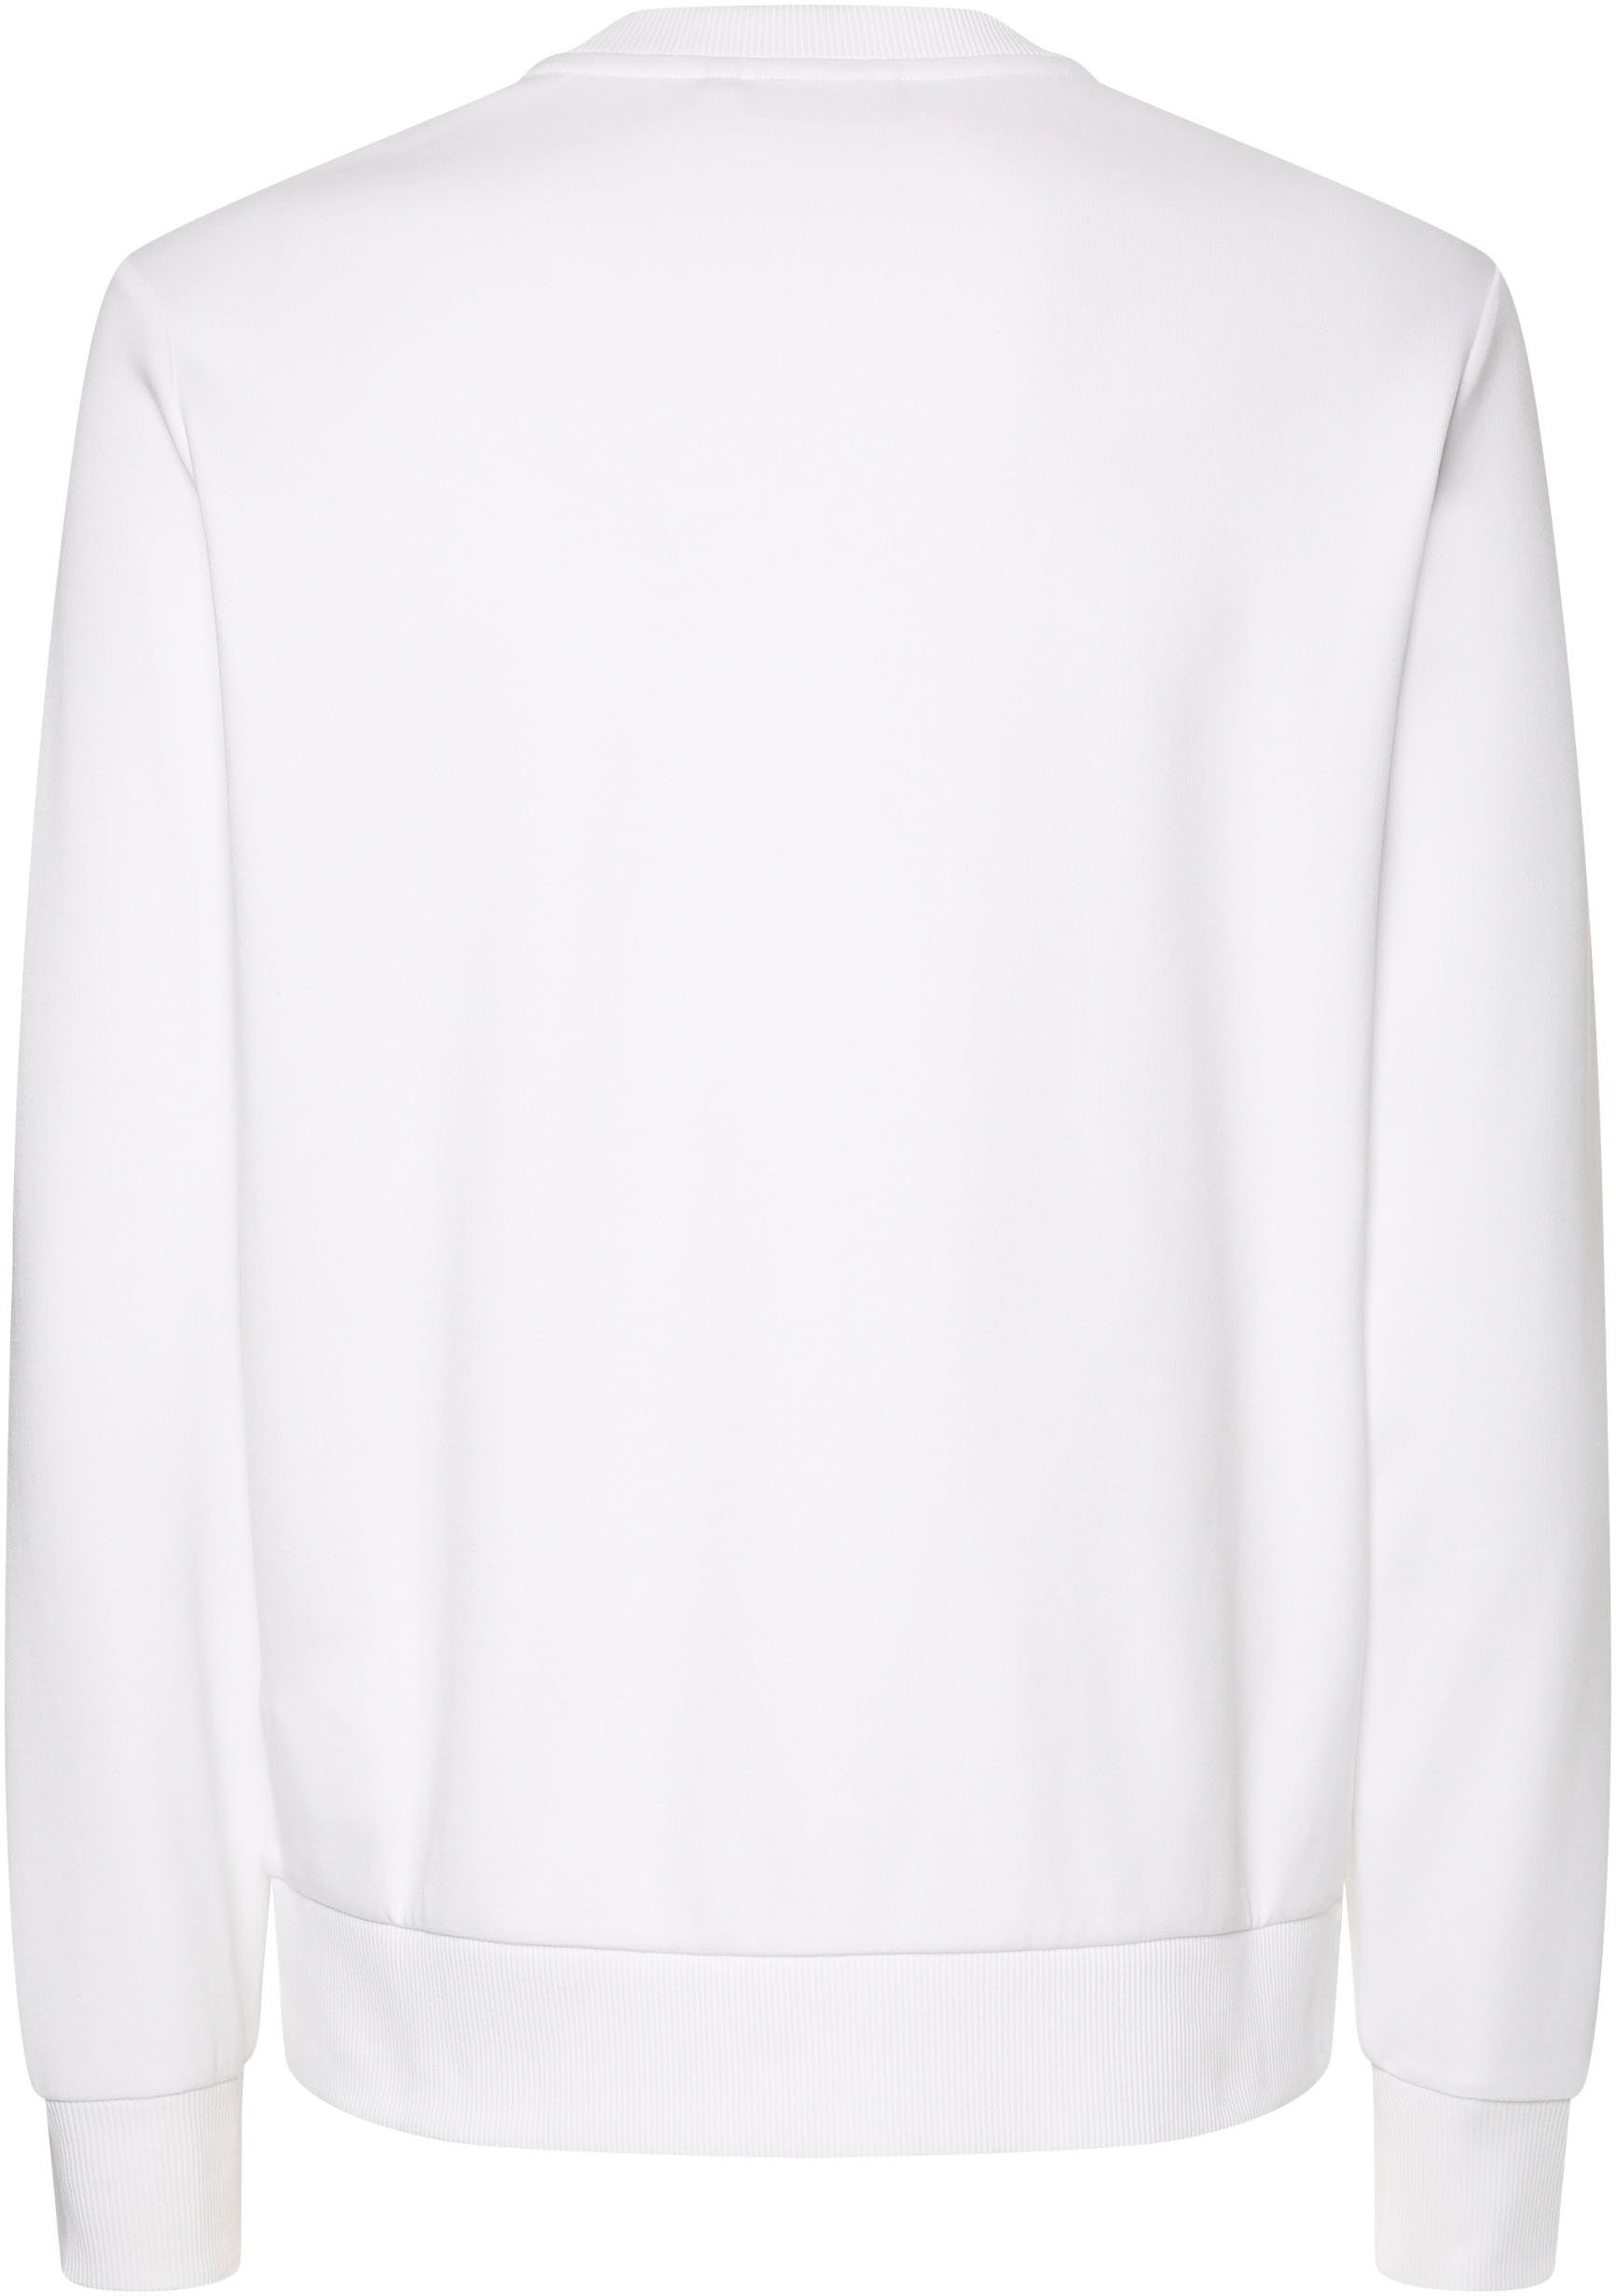 Sweatshirt LOGO SWEATSHIRT bright Calvin MICRO Klein white